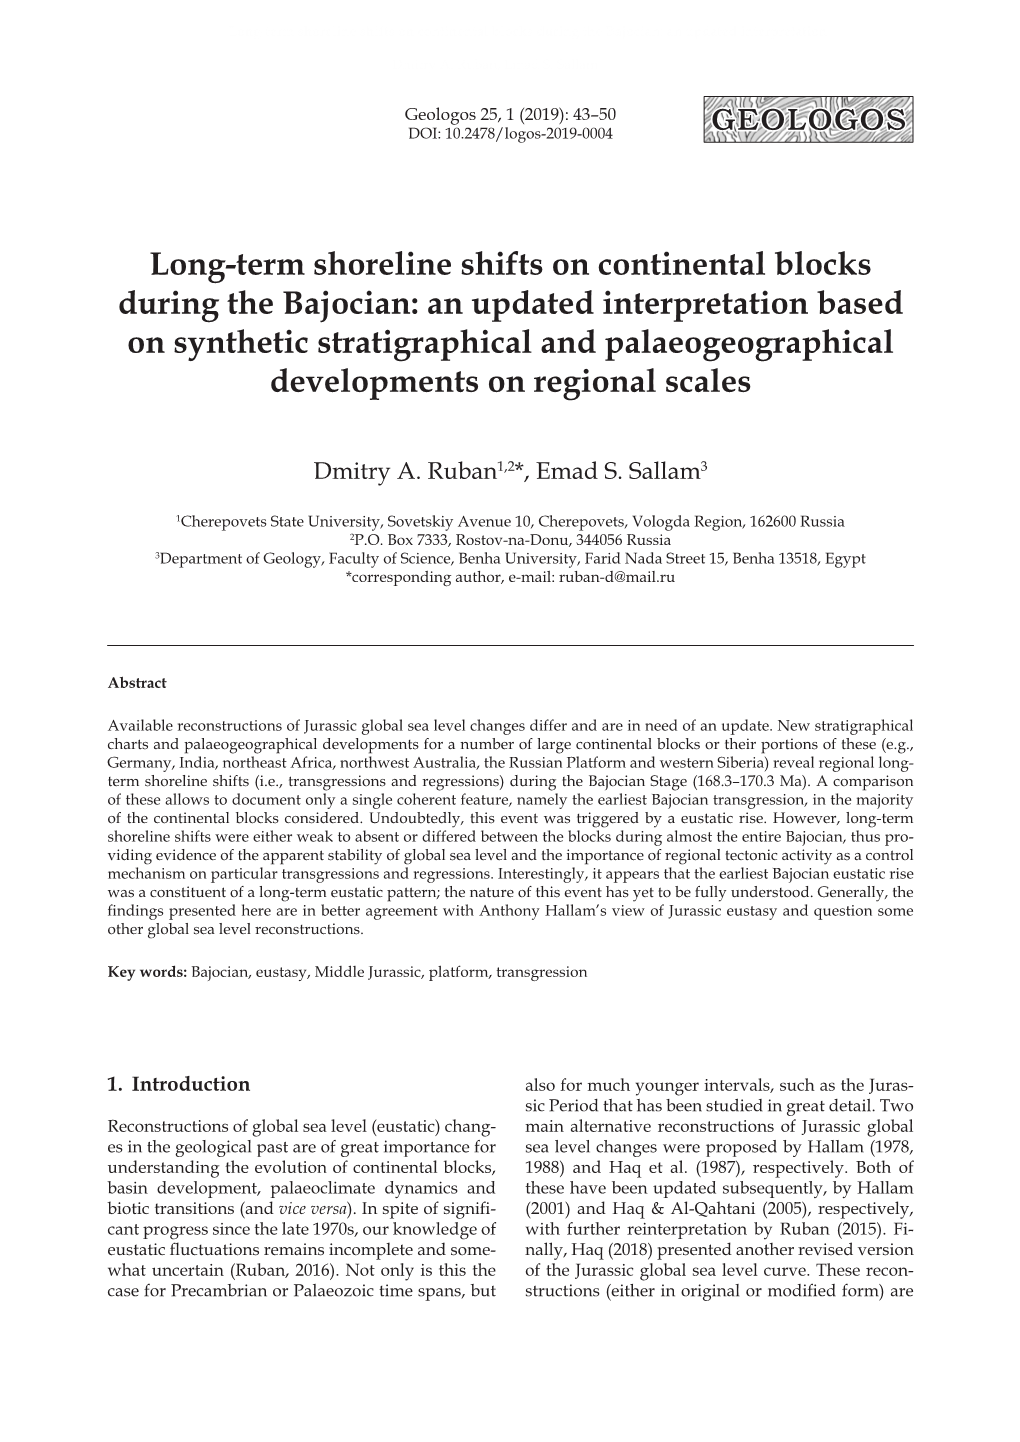 Long-Term Shoreline Shifts on Continental Blocks During the Bajocian: an Updated Interpretation